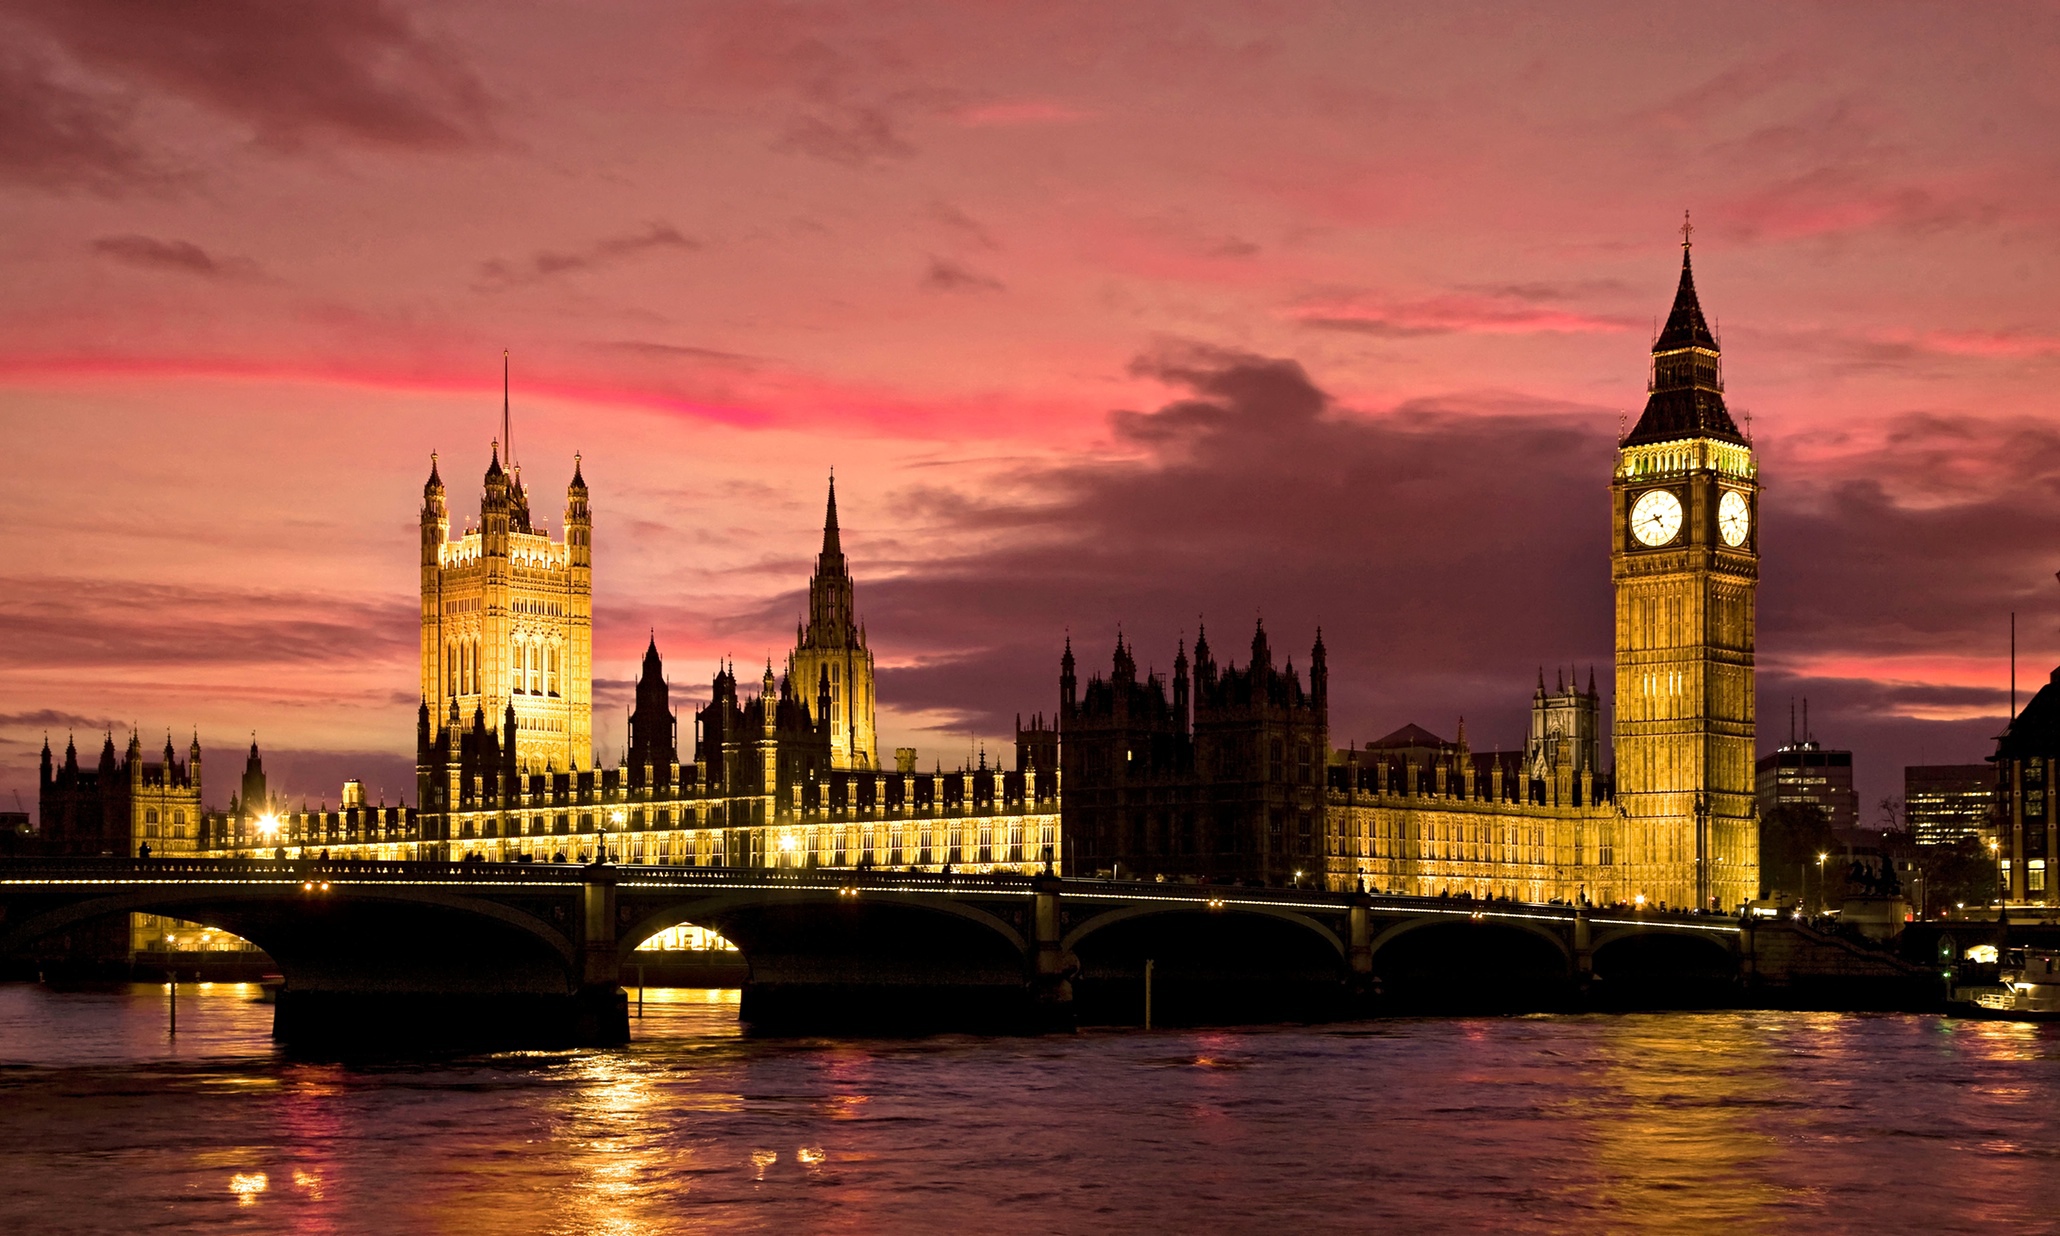 Houses of Parliament в Лондоне